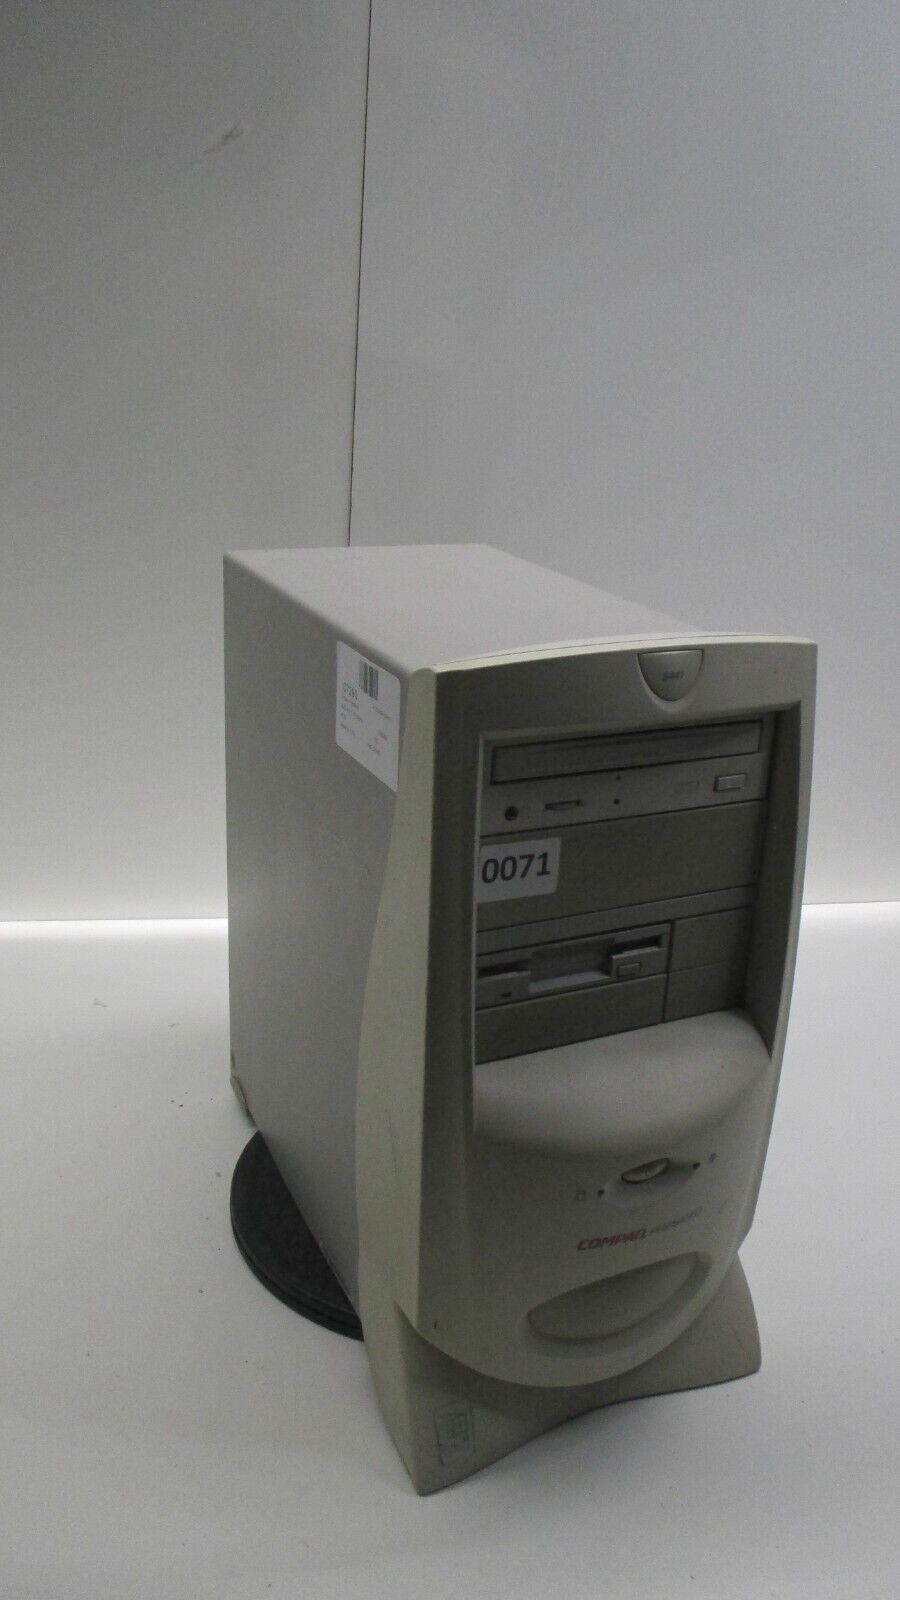 Compaq Presario 5441 Desktop Computer AMD K6-2 475MHz 128MB Ram No HDD